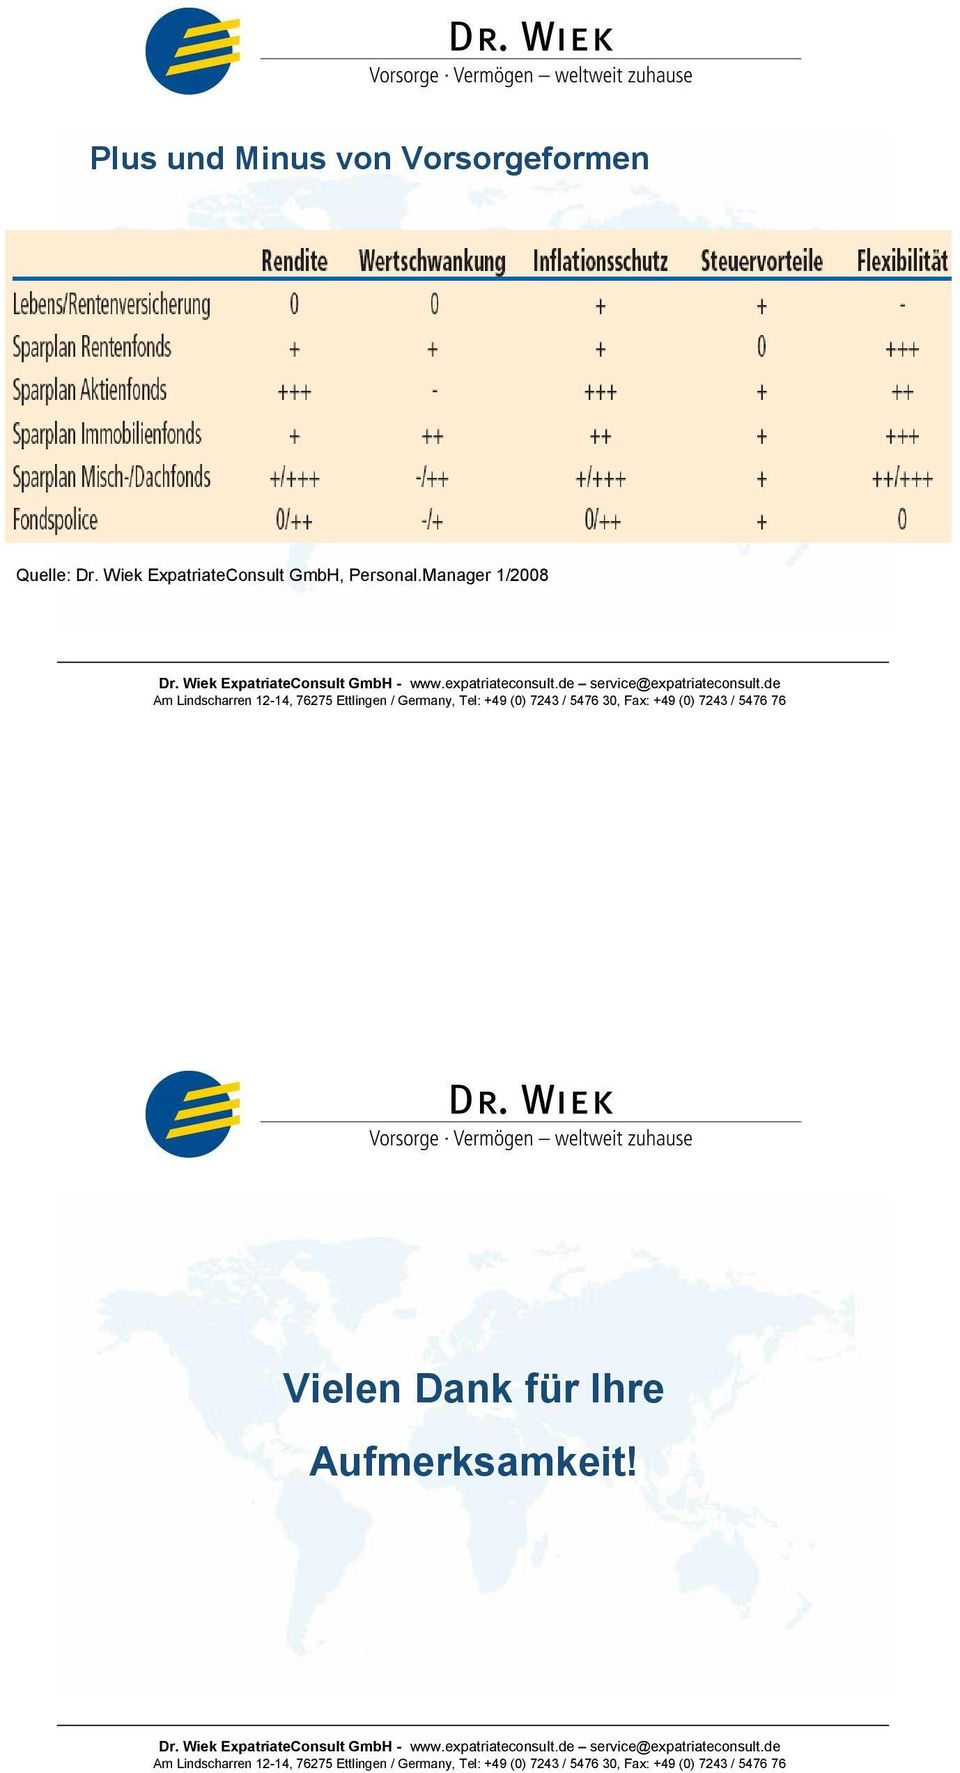 Wiek ExpatriateConsult GmbH,